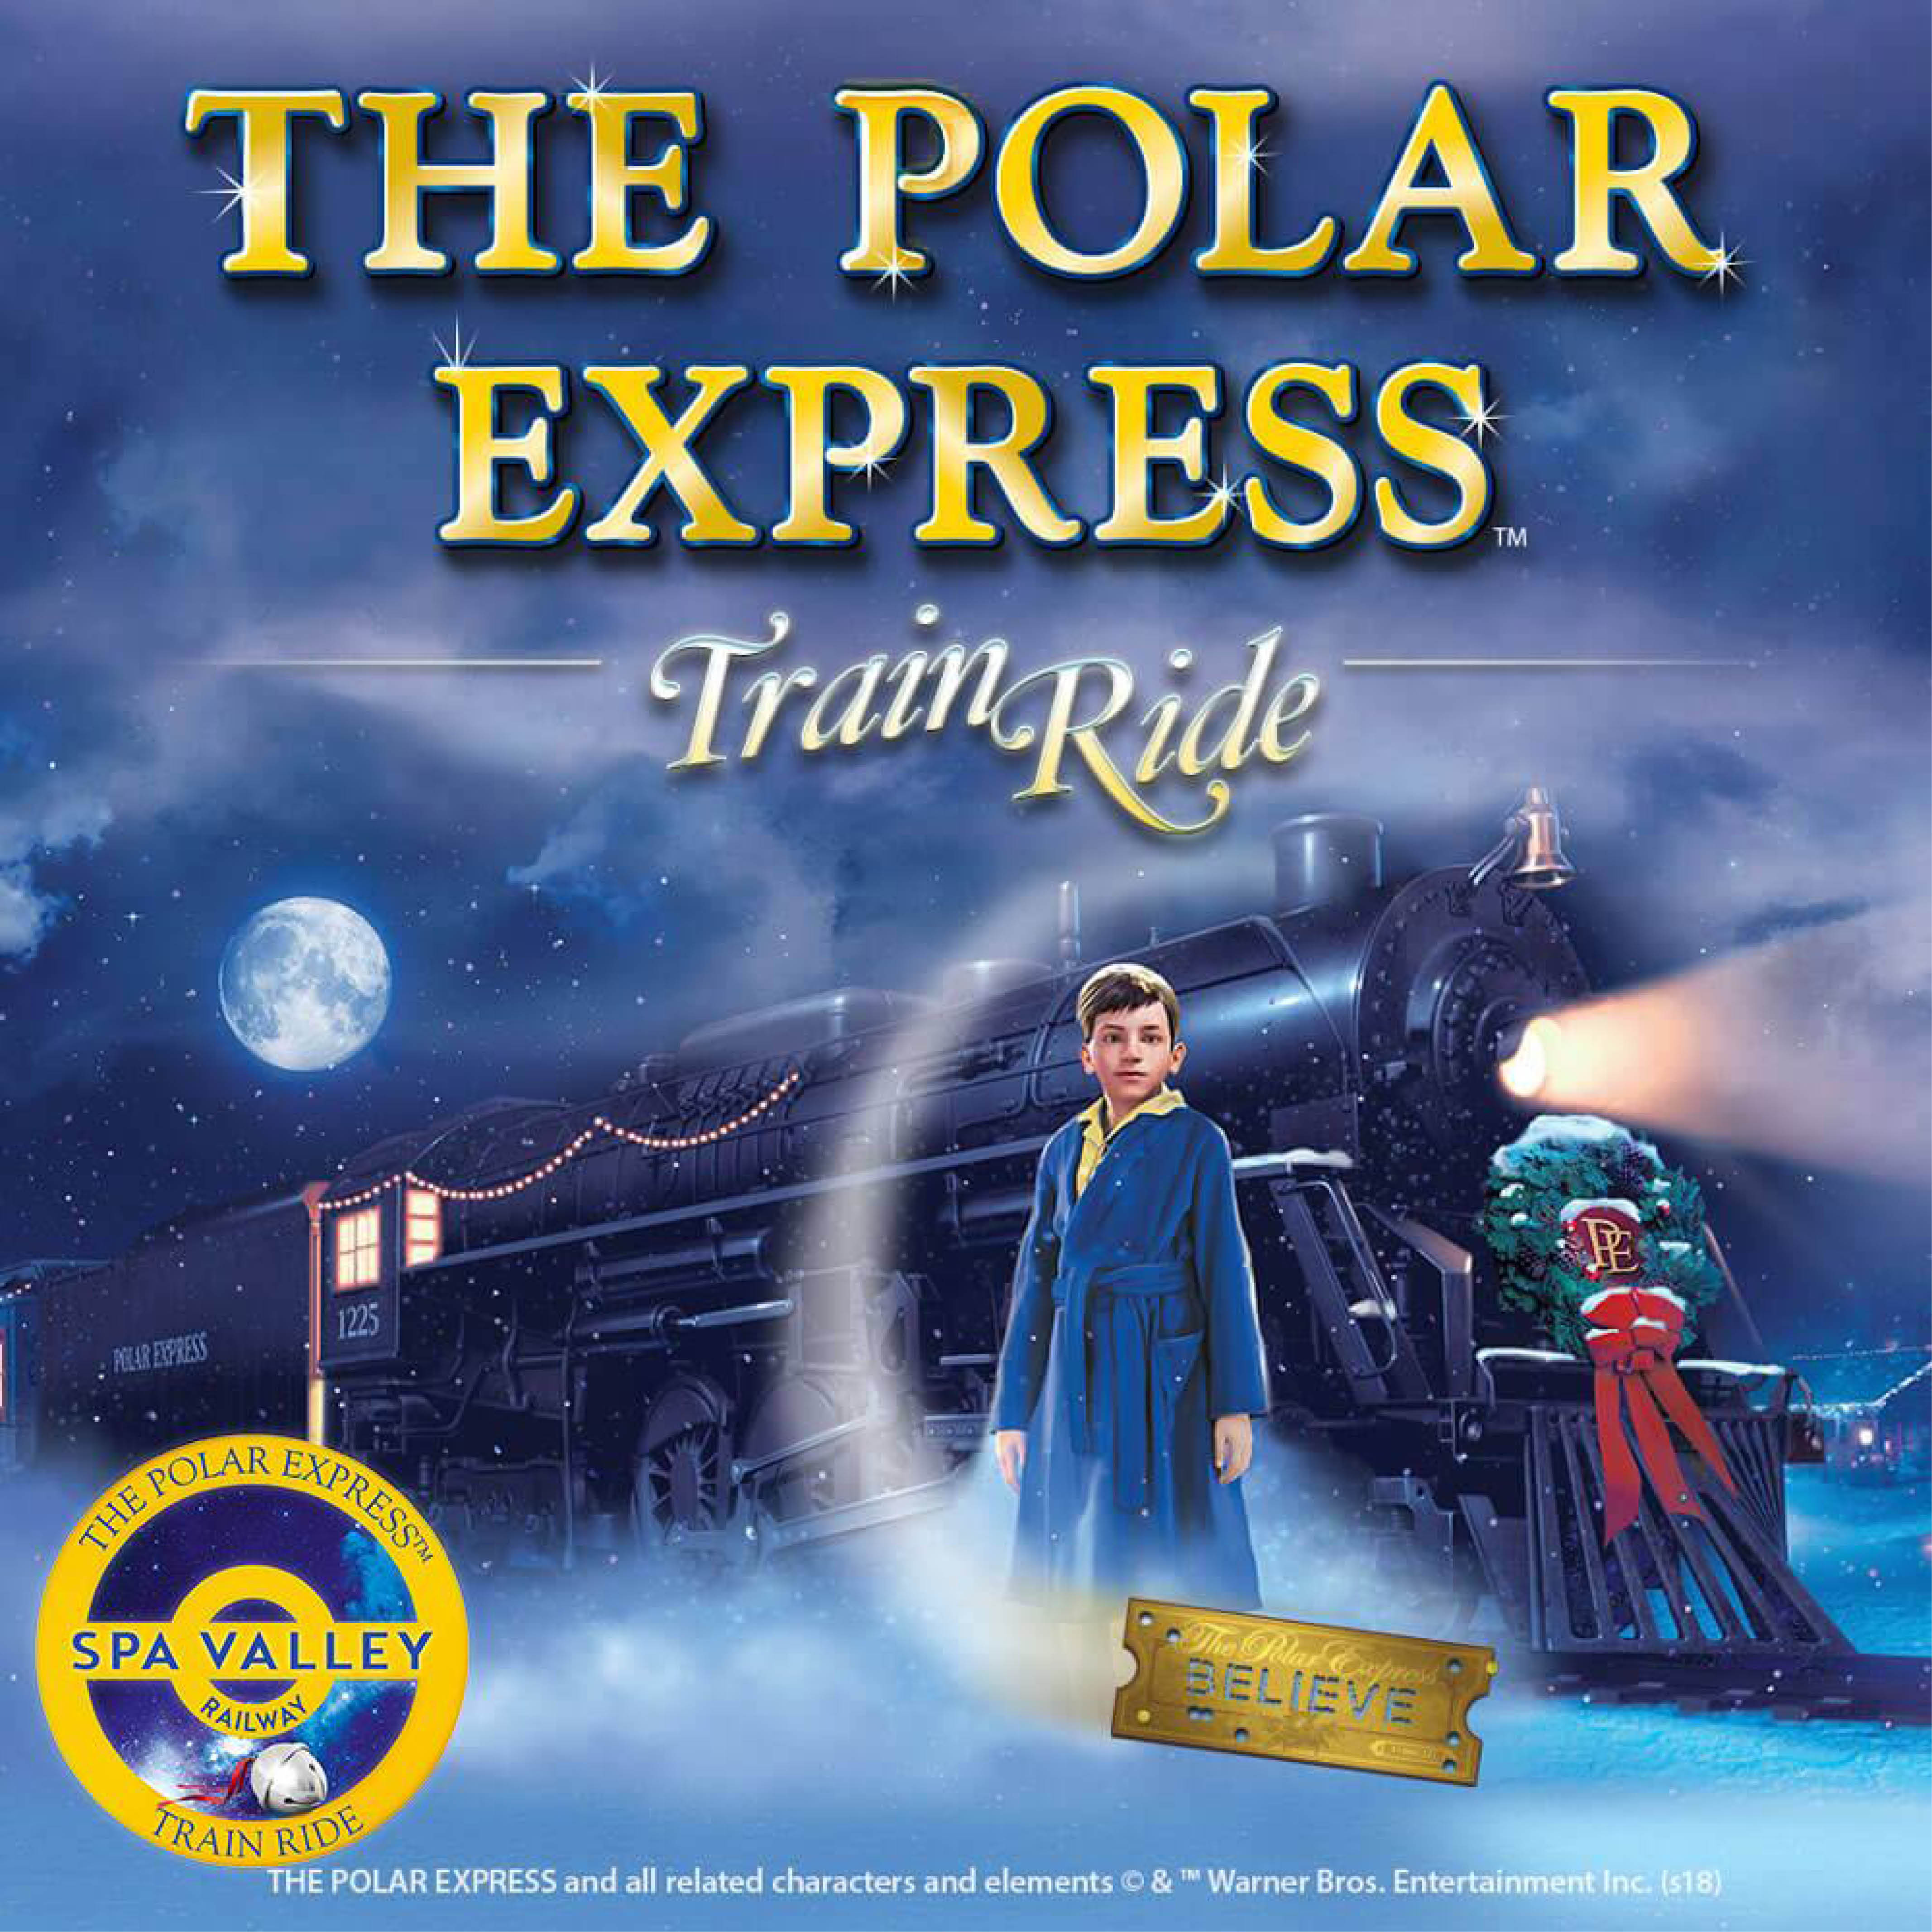 THE POLAR EXPRESS Train Ride